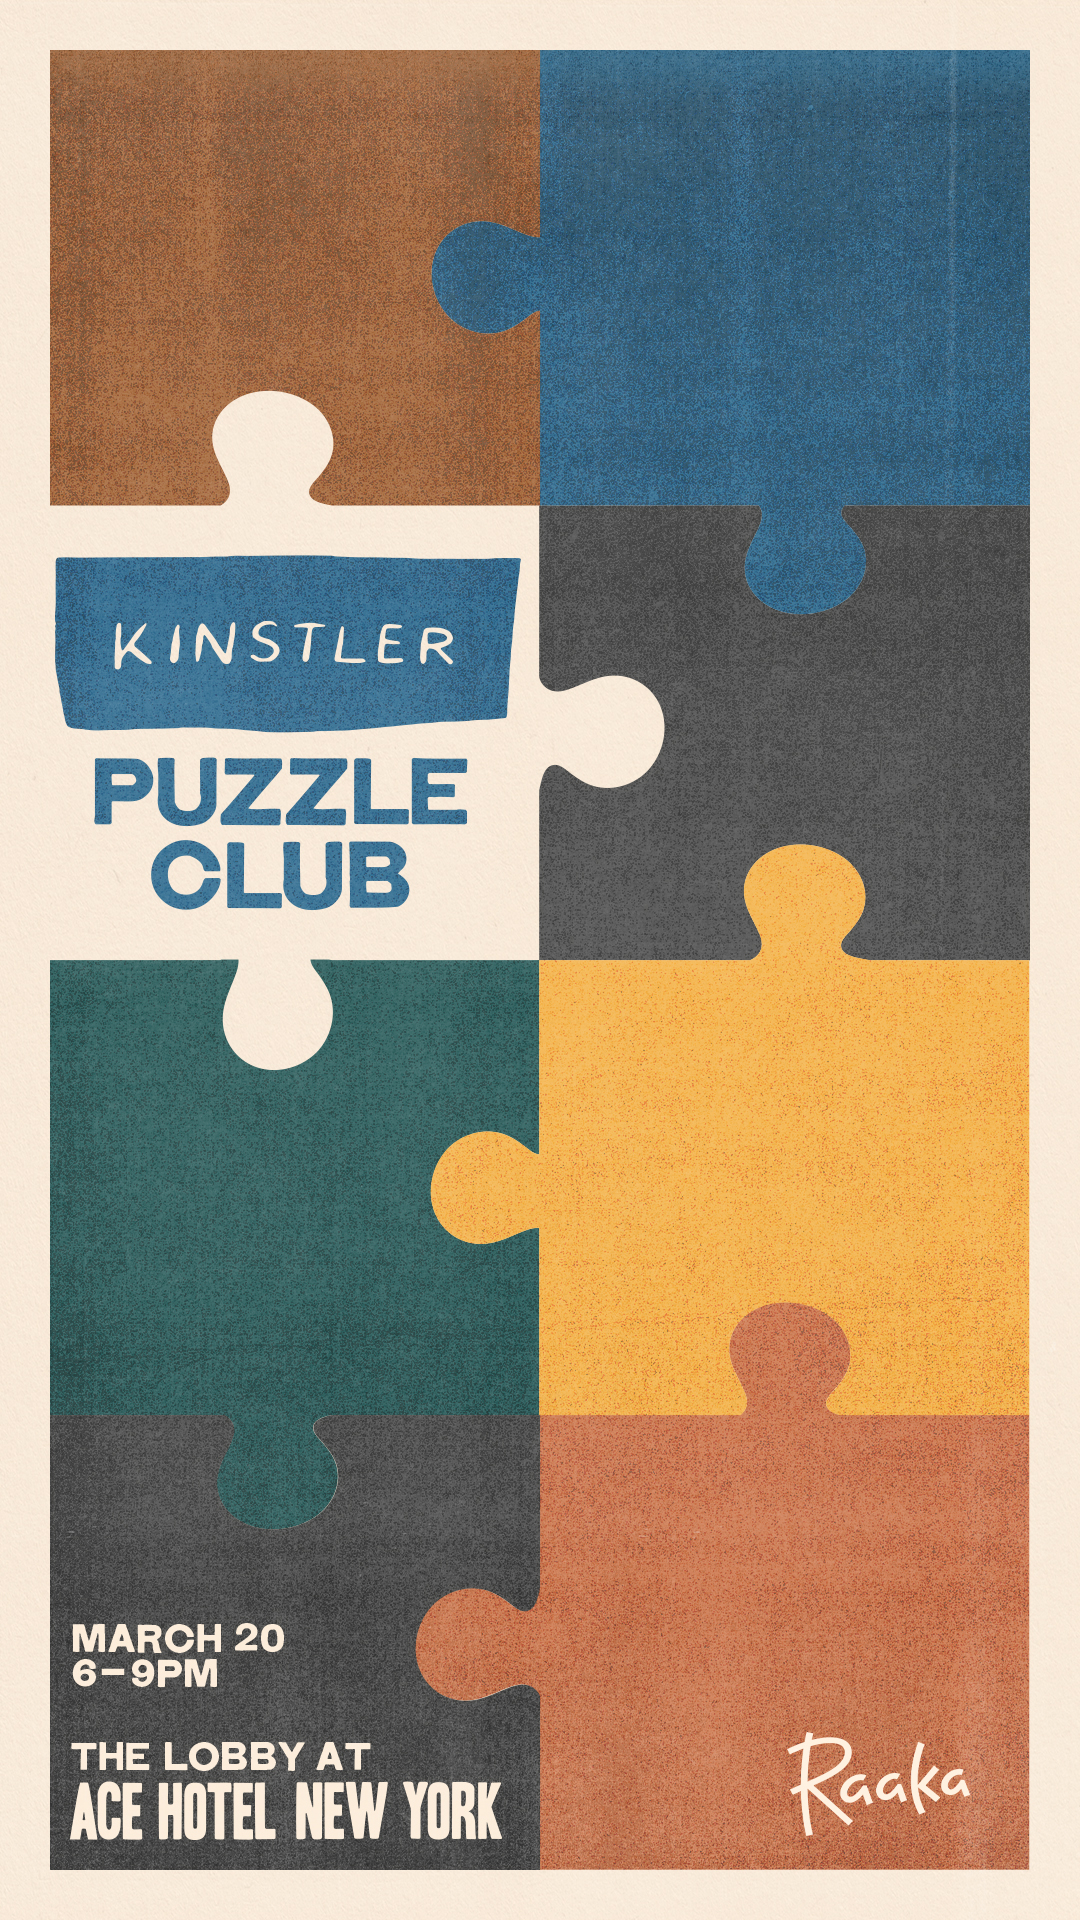 Kinstler Puzzle Club March 20